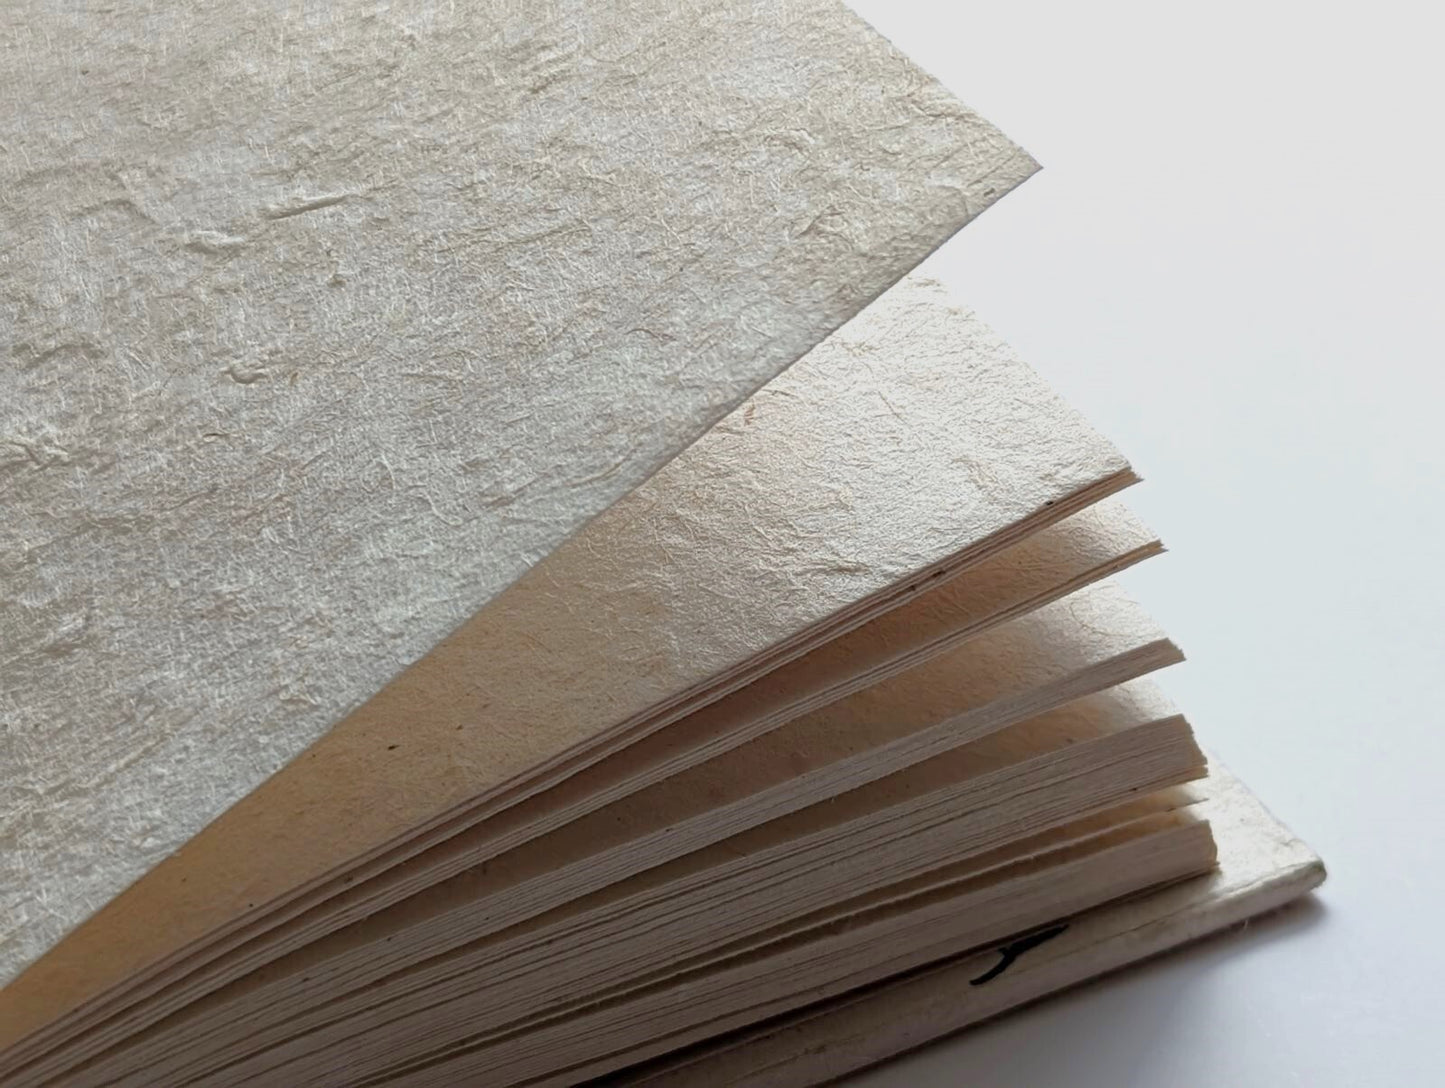 Handmade paper Journal | Bougainvillea Petals